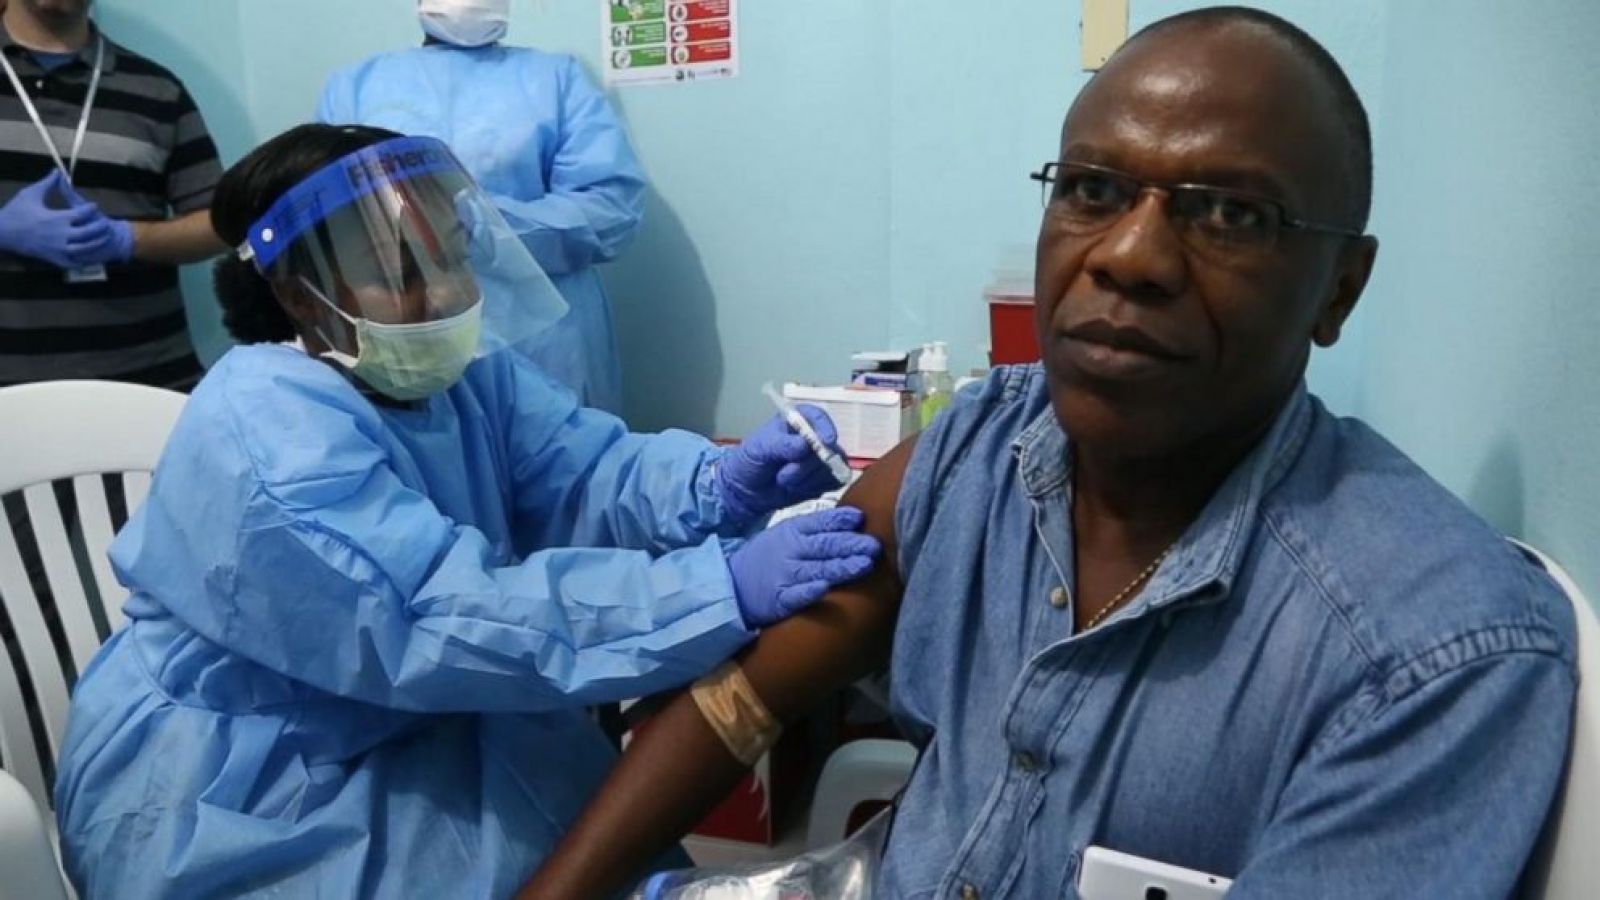 A breakthrough treatment for Ebola